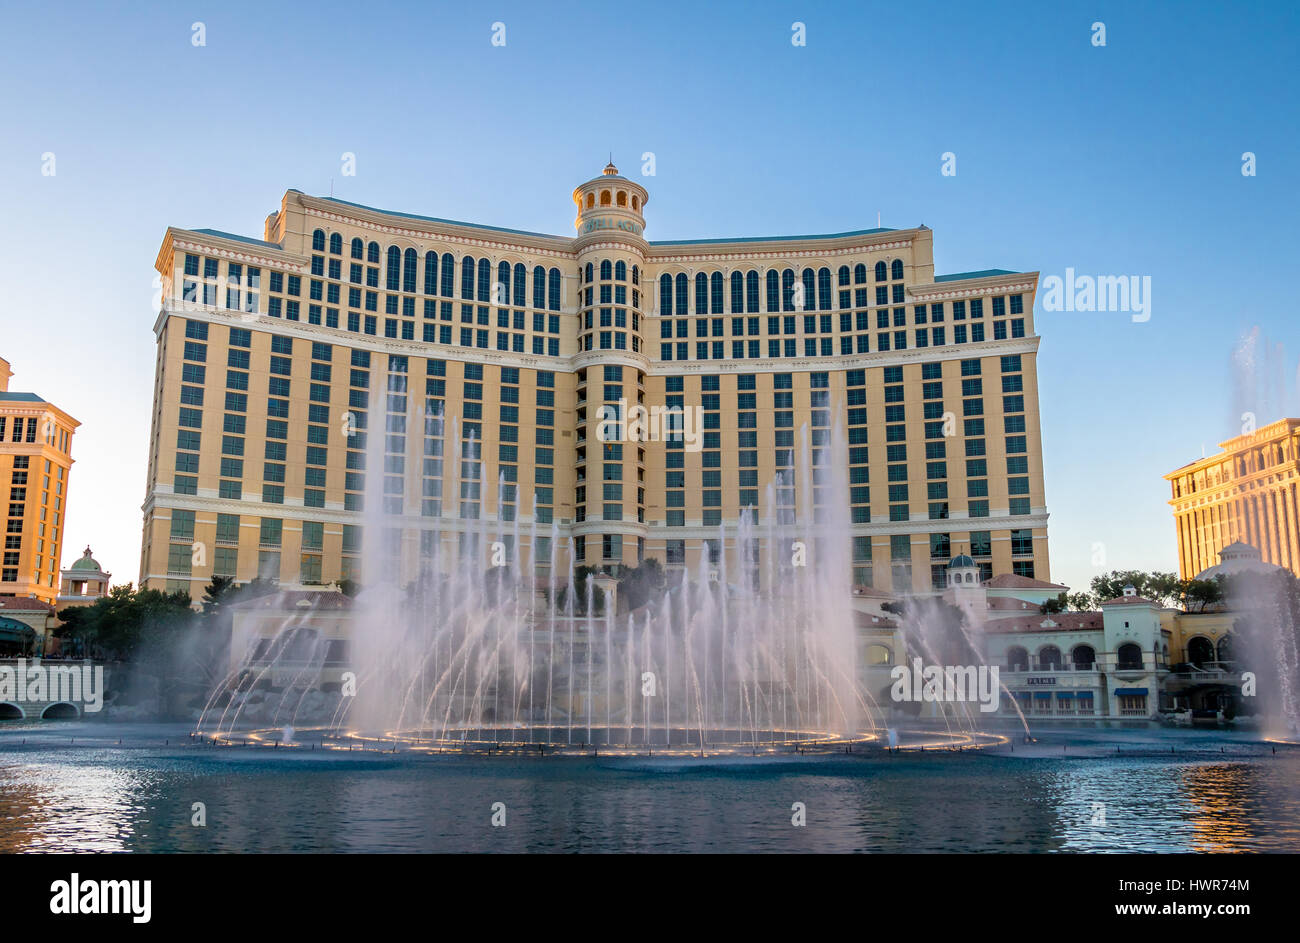 Dancing Fountains at Bellagio Hotel Casino - Las Vegas, USA Stock Photo